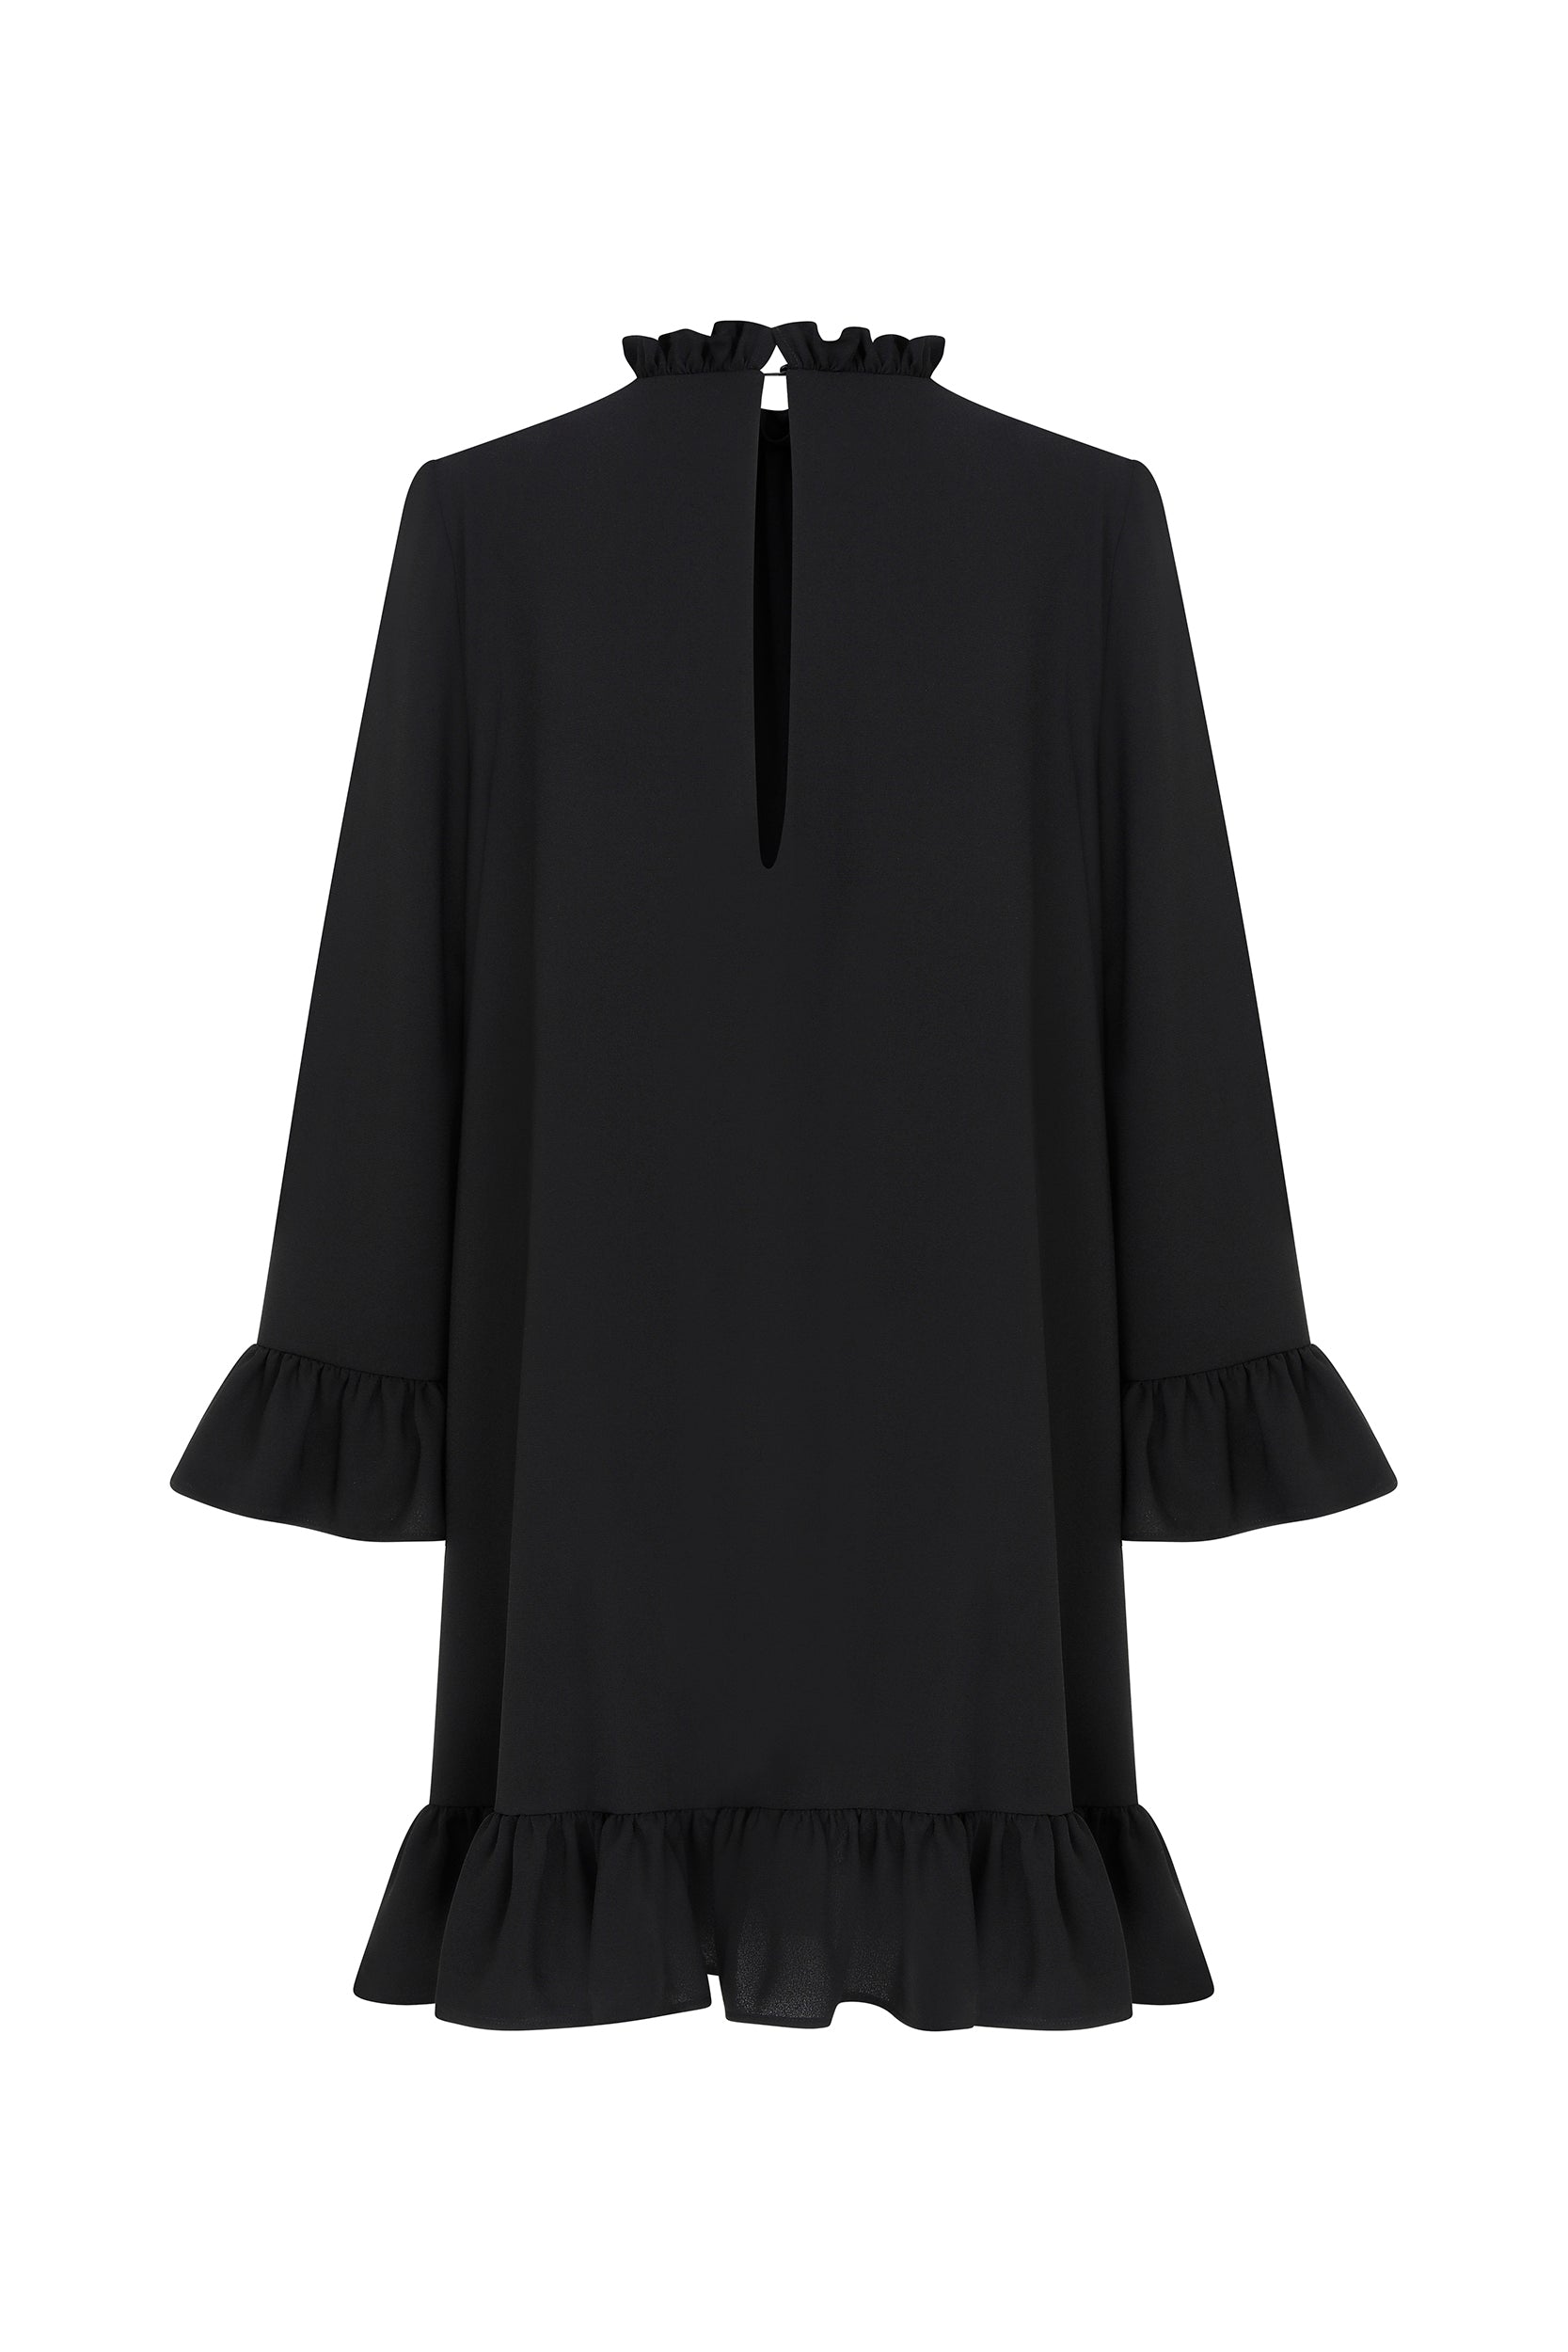 Ruffle Black Mini Dress --[BLACK]